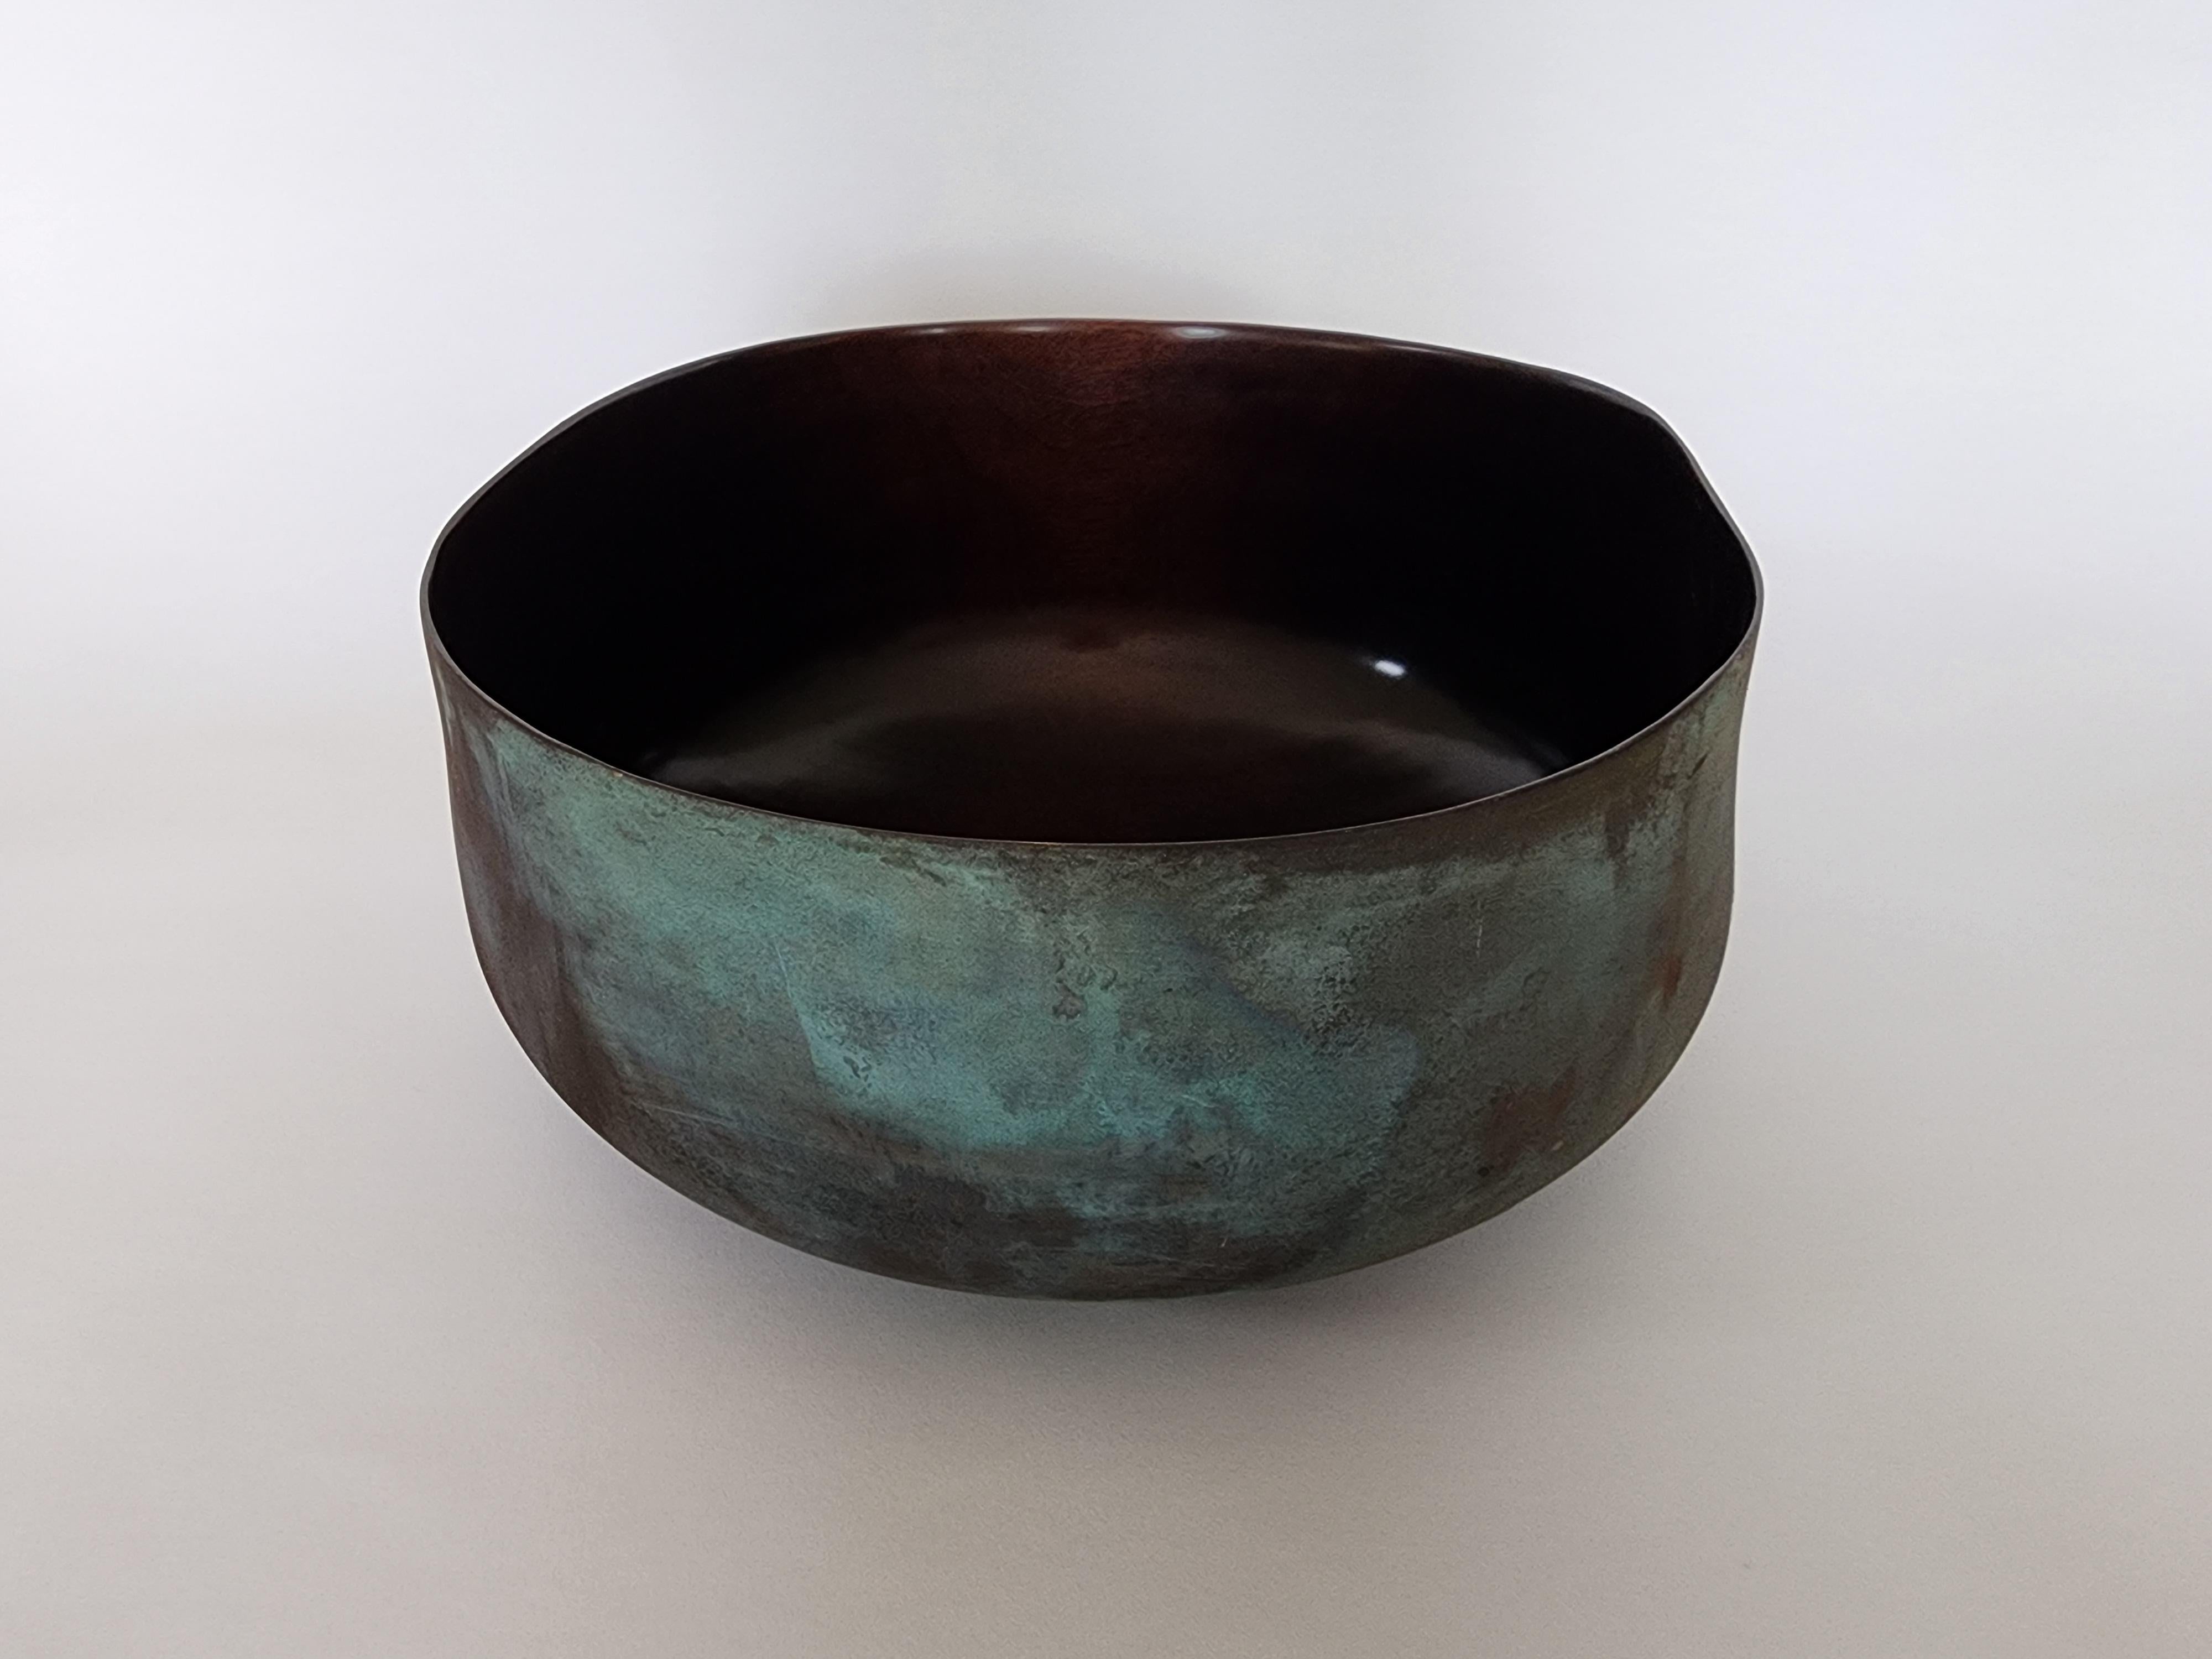 Asian Contemporary The Earth's Language 01 bowl by Sukkeun Kang For Sale